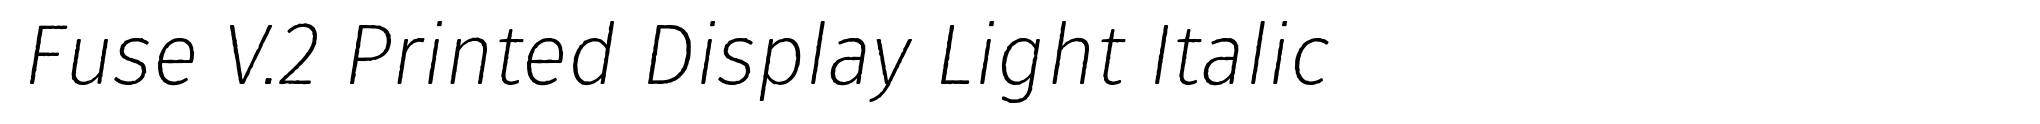 Fuse V.2 Printed Display Light Italic image